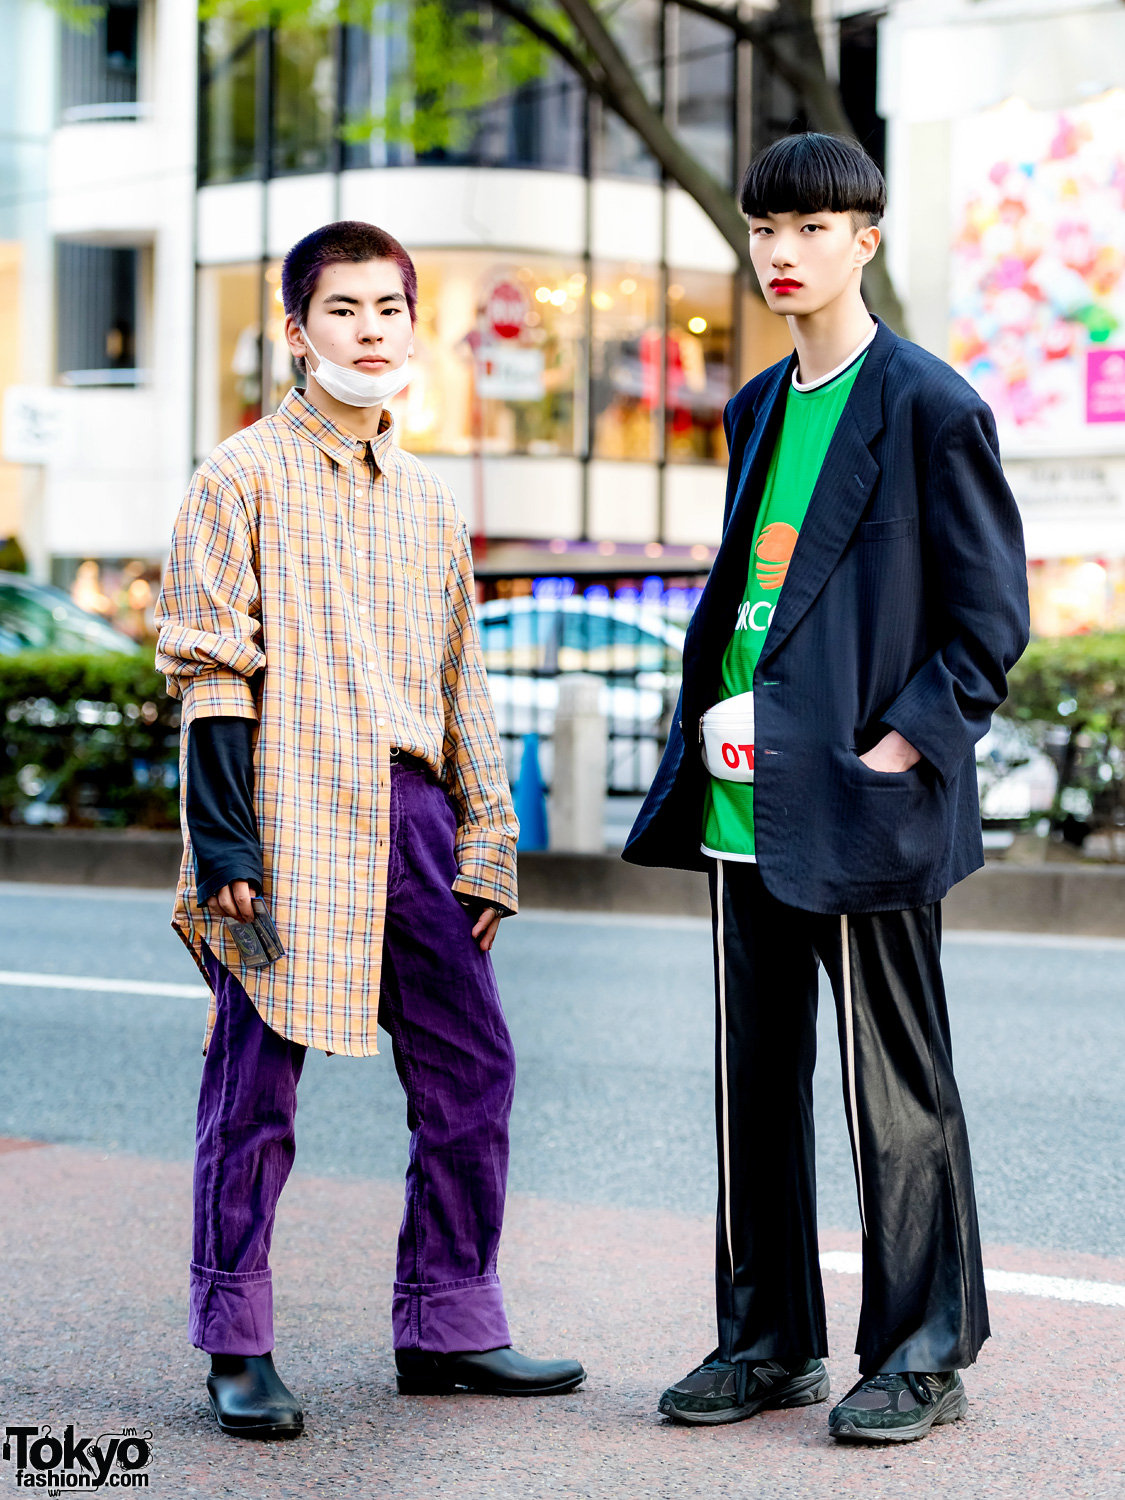 Harajuku Vintage Menswear Street Styles w/ Comme des Garcons, Umbro, Onitsuka Tiger, Punyus, Yu-Gi-Oh! Cards & Red Lipstick